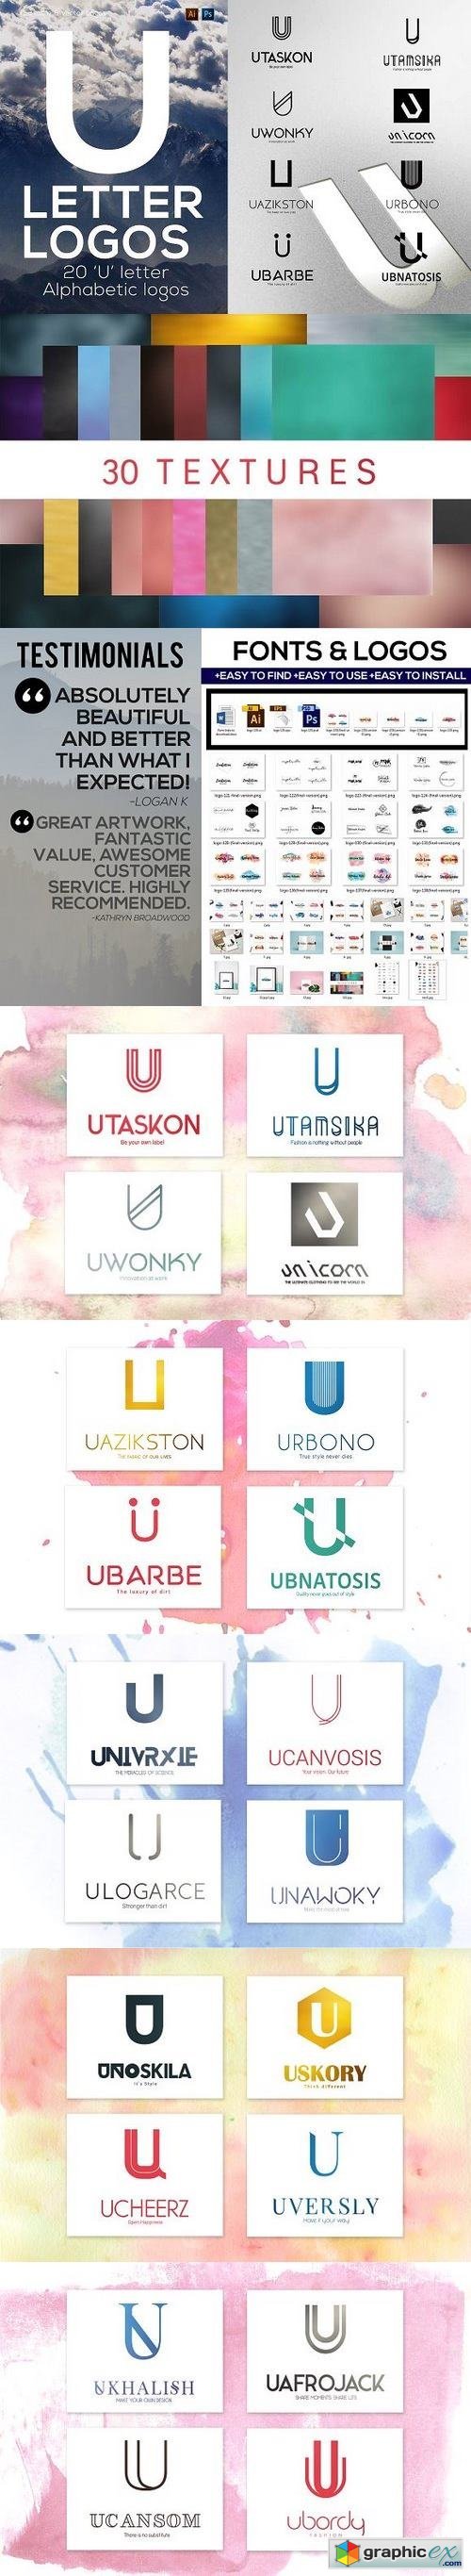 20 "U" Letter Alphabetic Logos